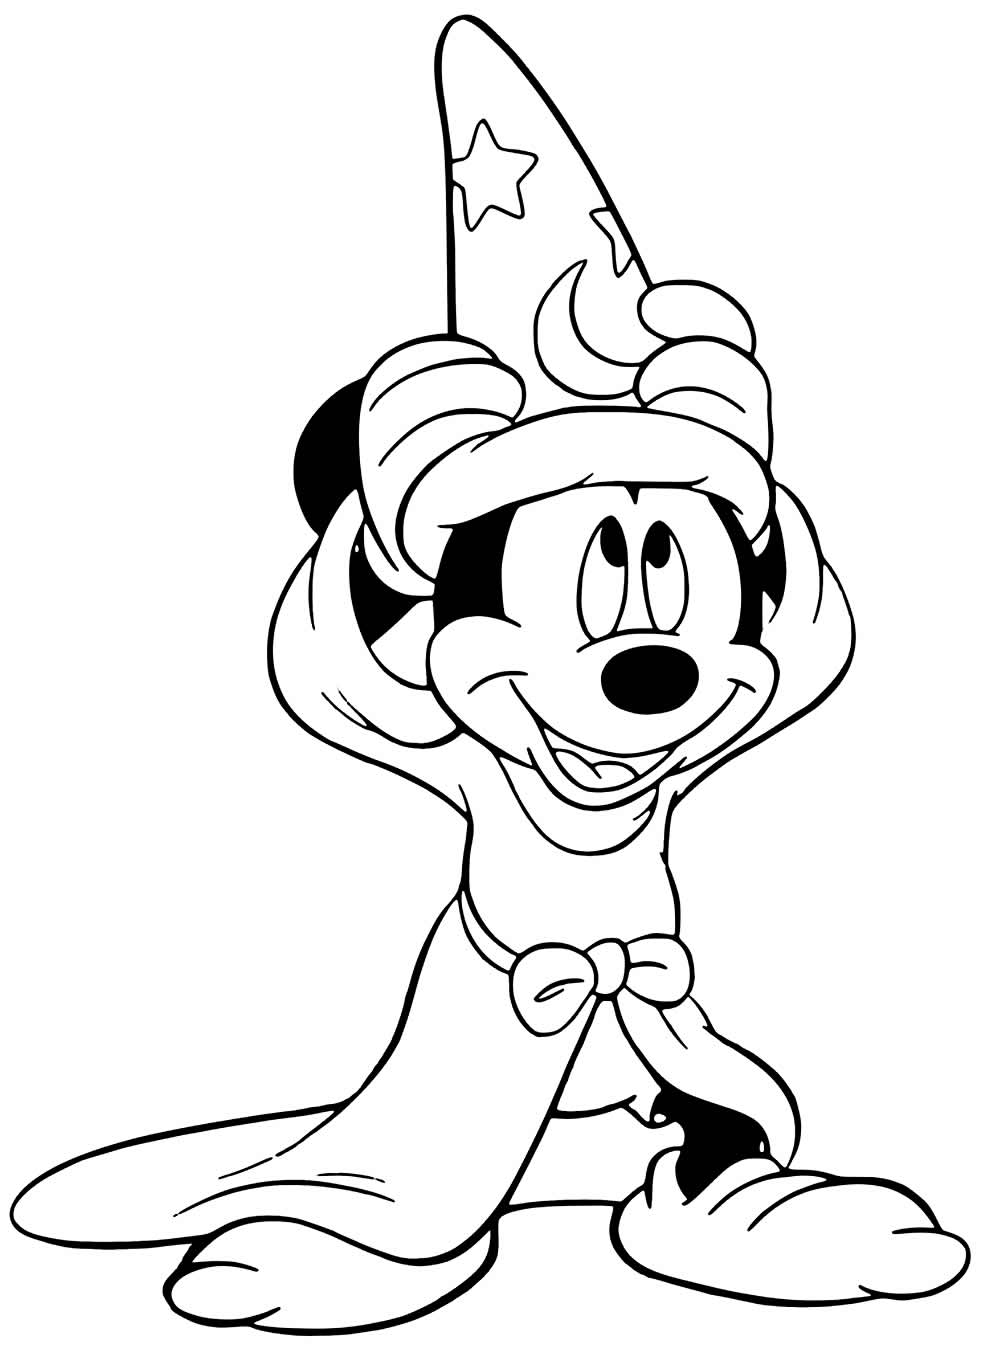 Desenho do Mickey mágico